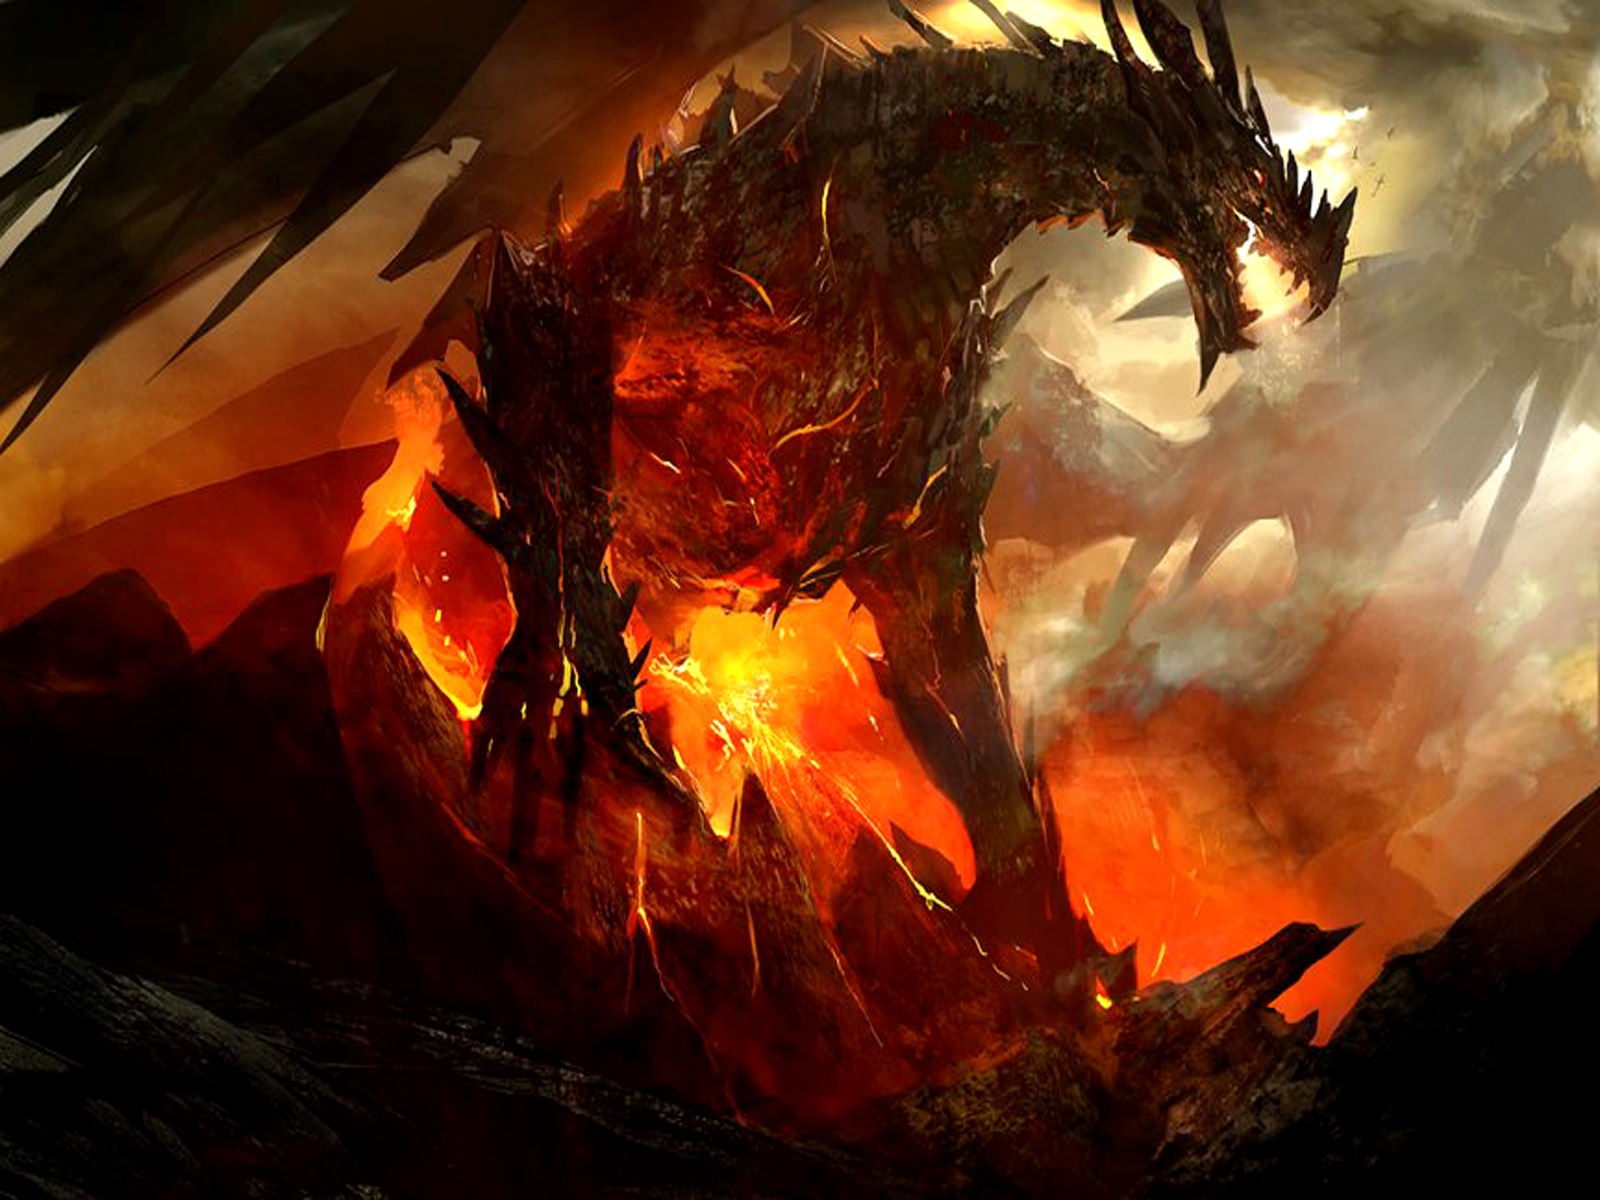  dragon background image dragon desktop wallpapers dragon hd wallpapers